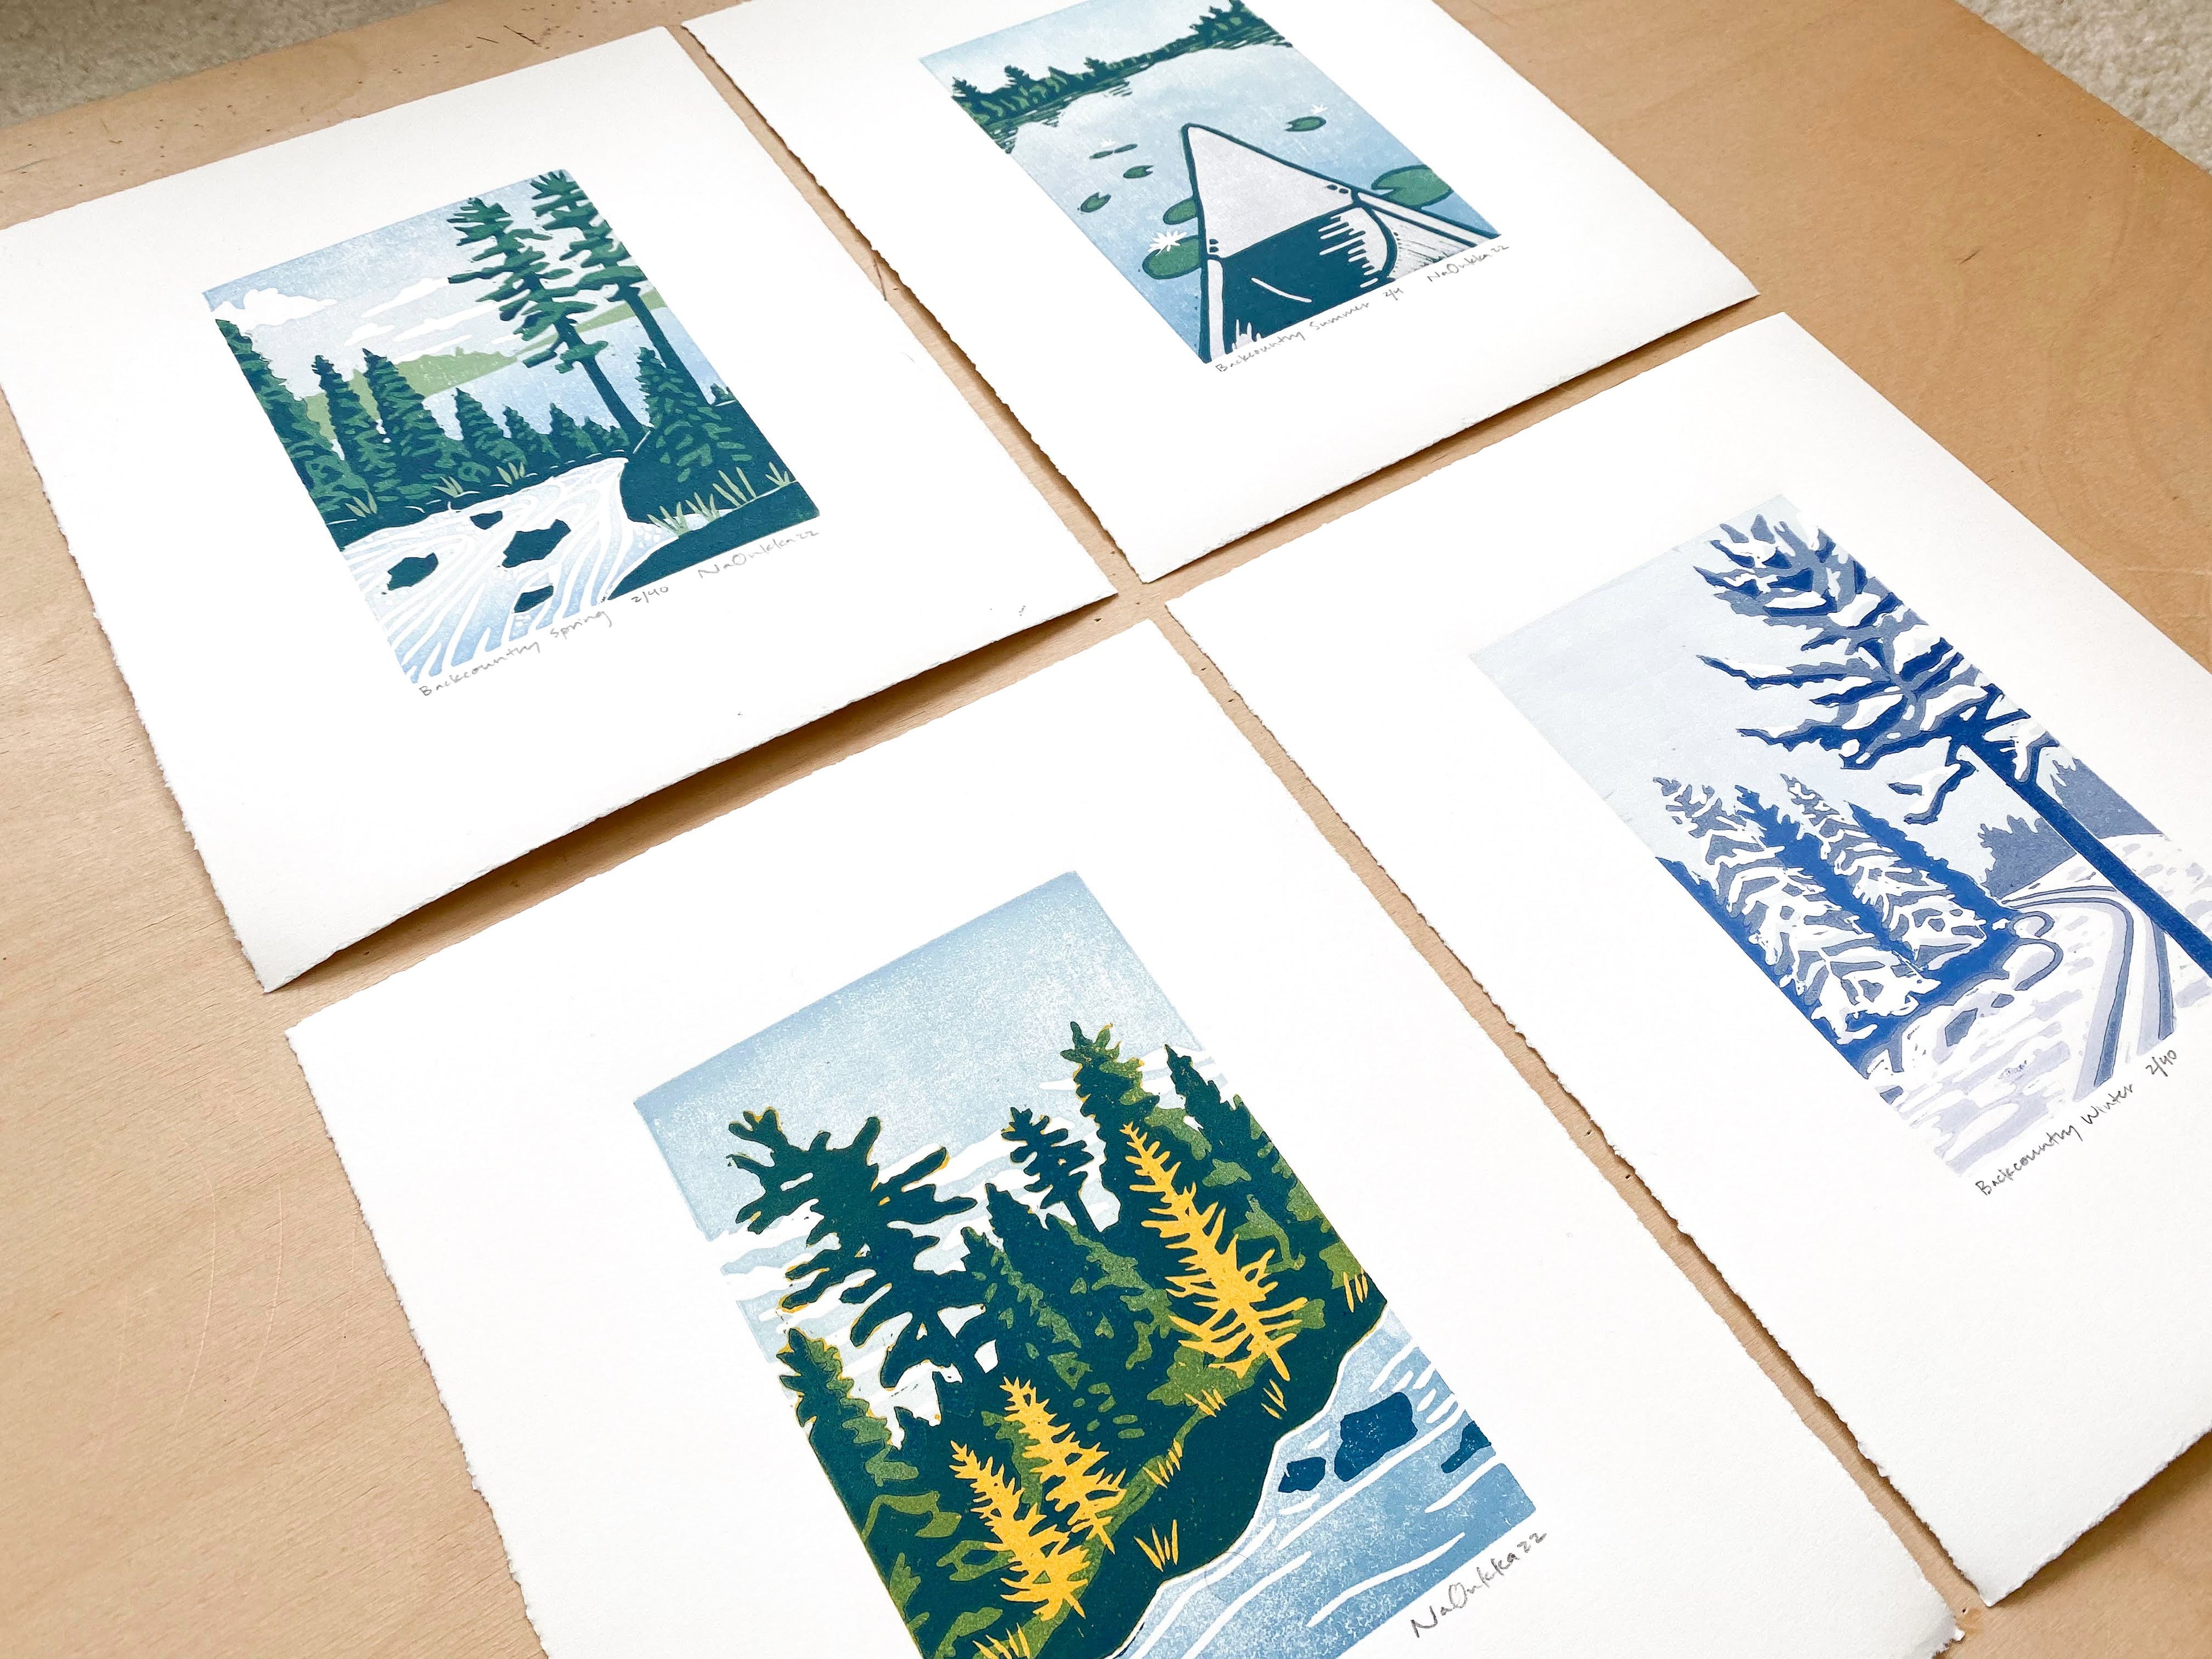 Four woodcut prints made by Nan Onkka that depict the four seasons. 